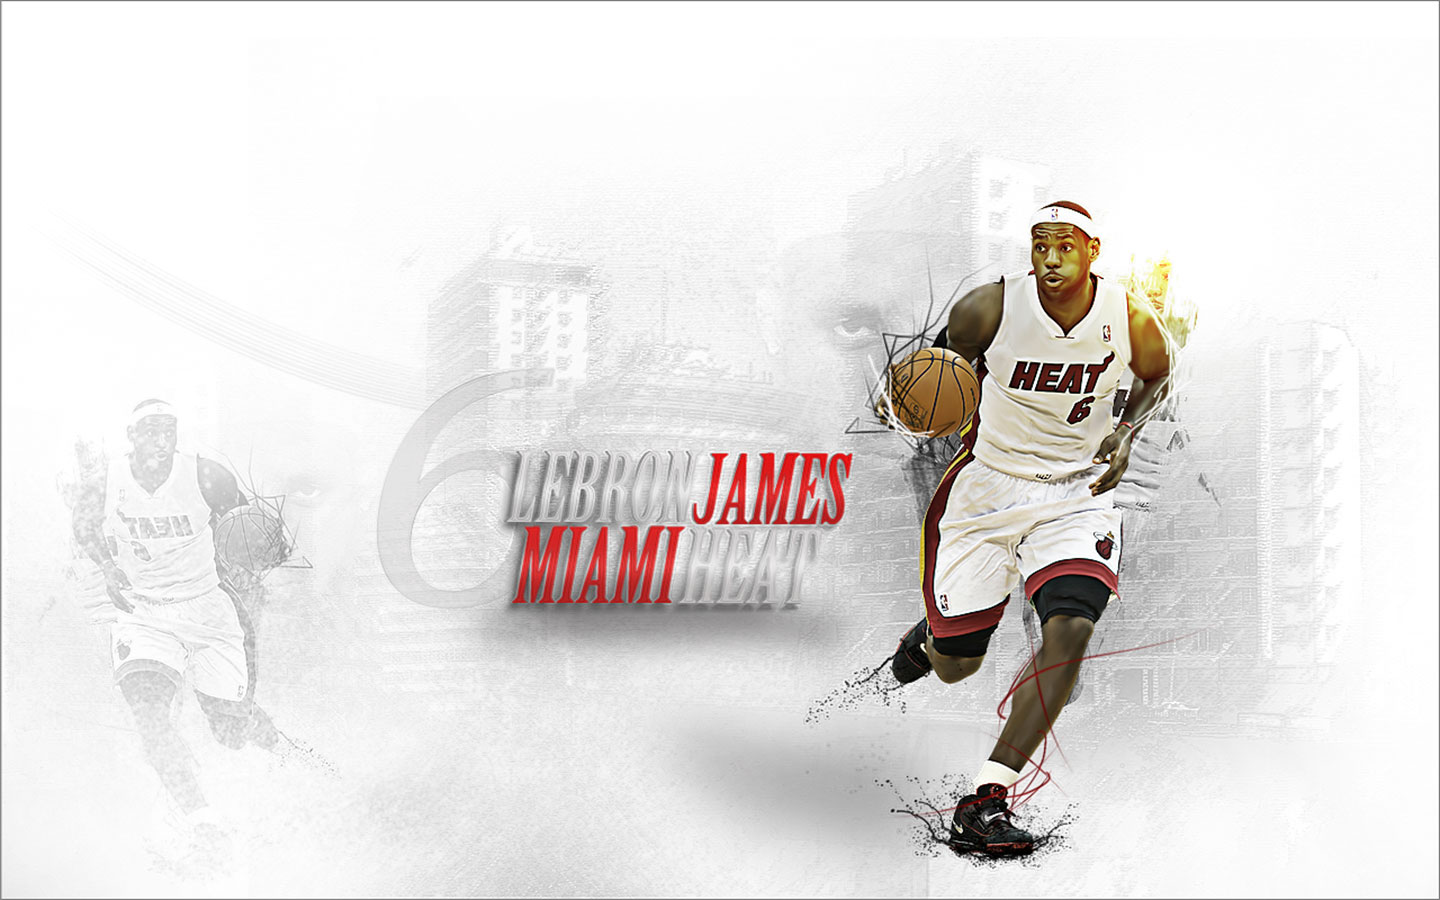 Next Is New Widescreen Wallpaper Of Lebron James In Miami Heat